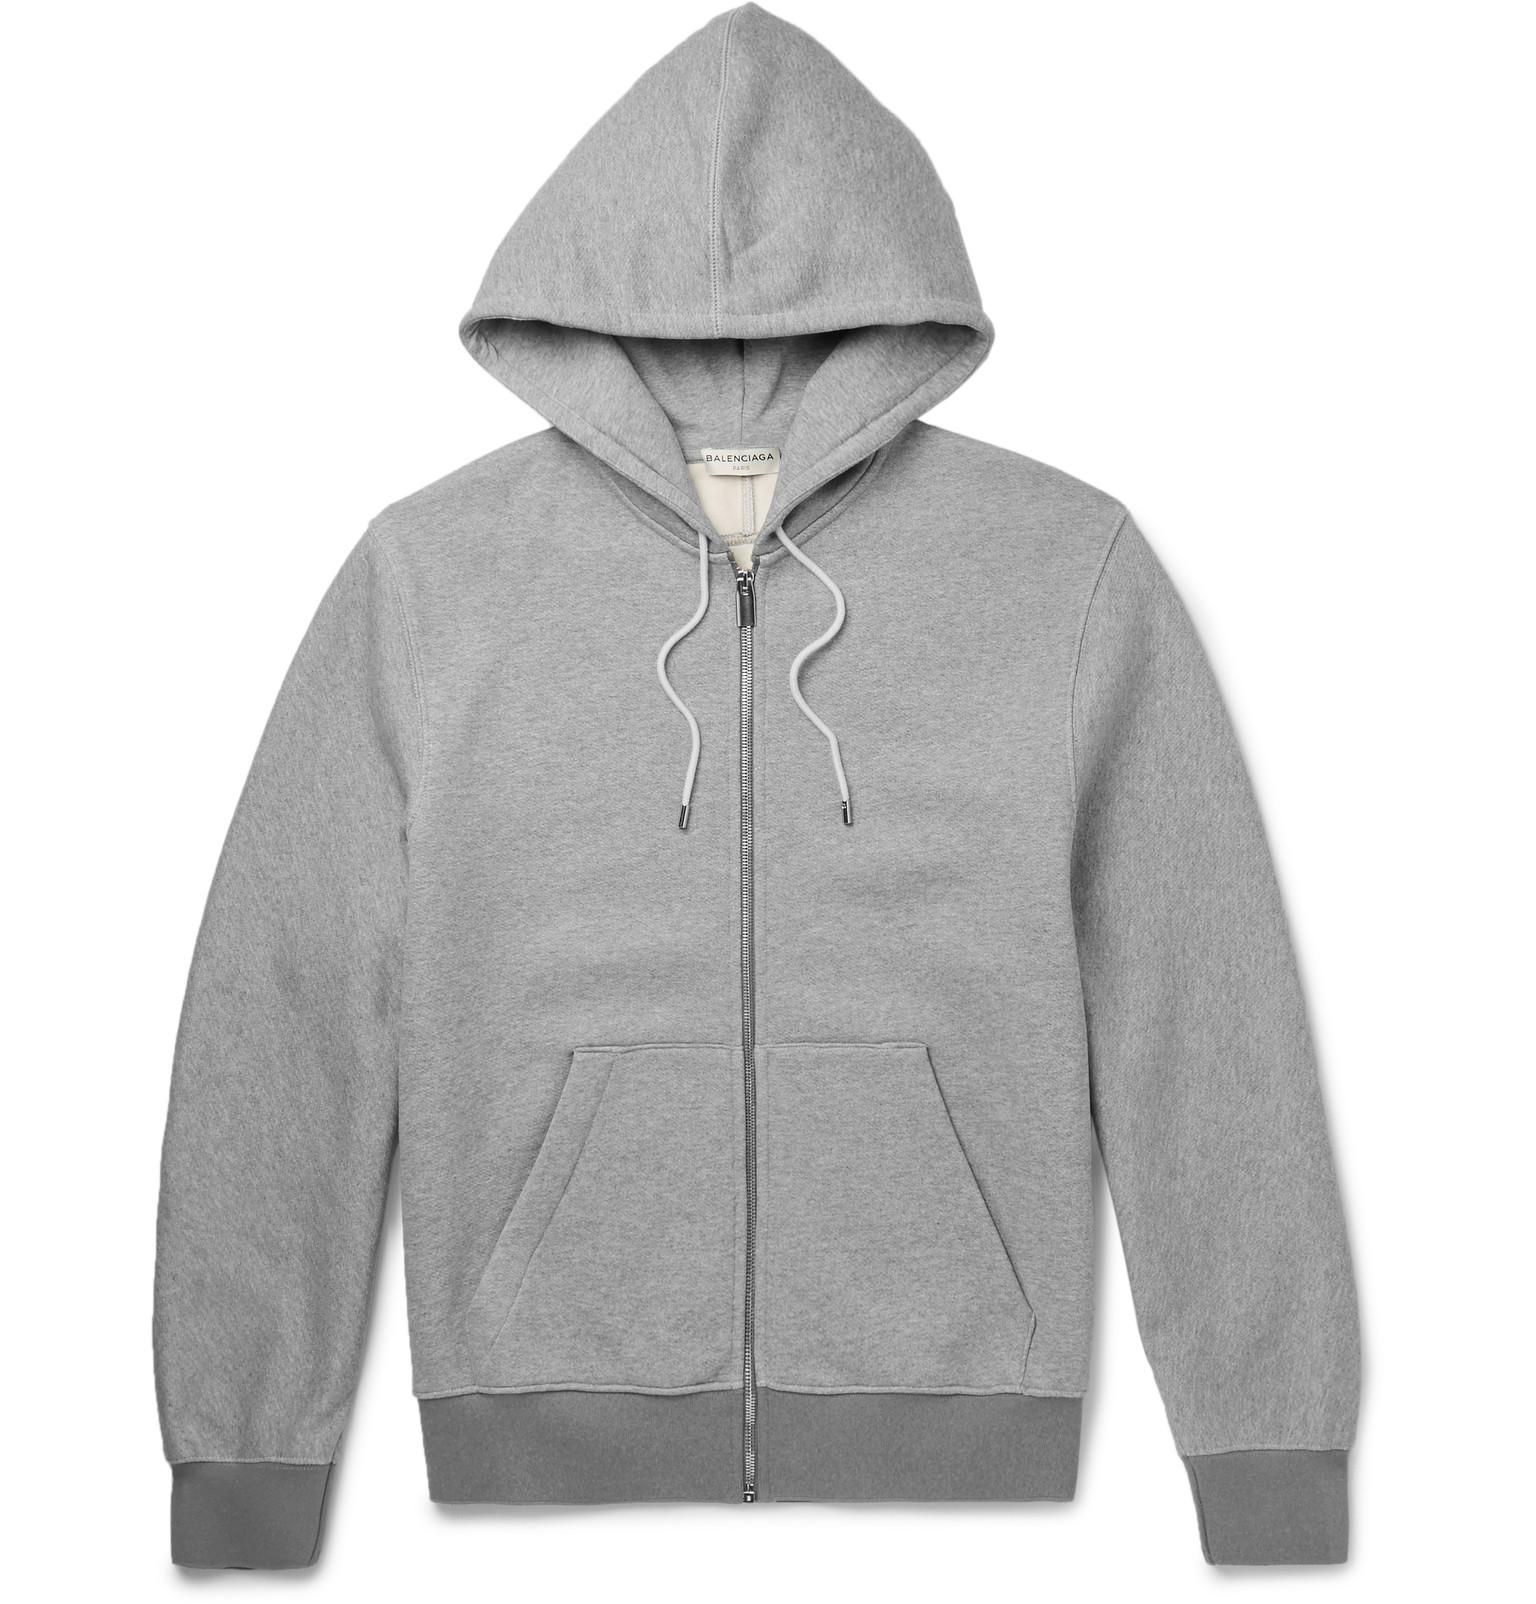 balenciaga white zip up hoodie